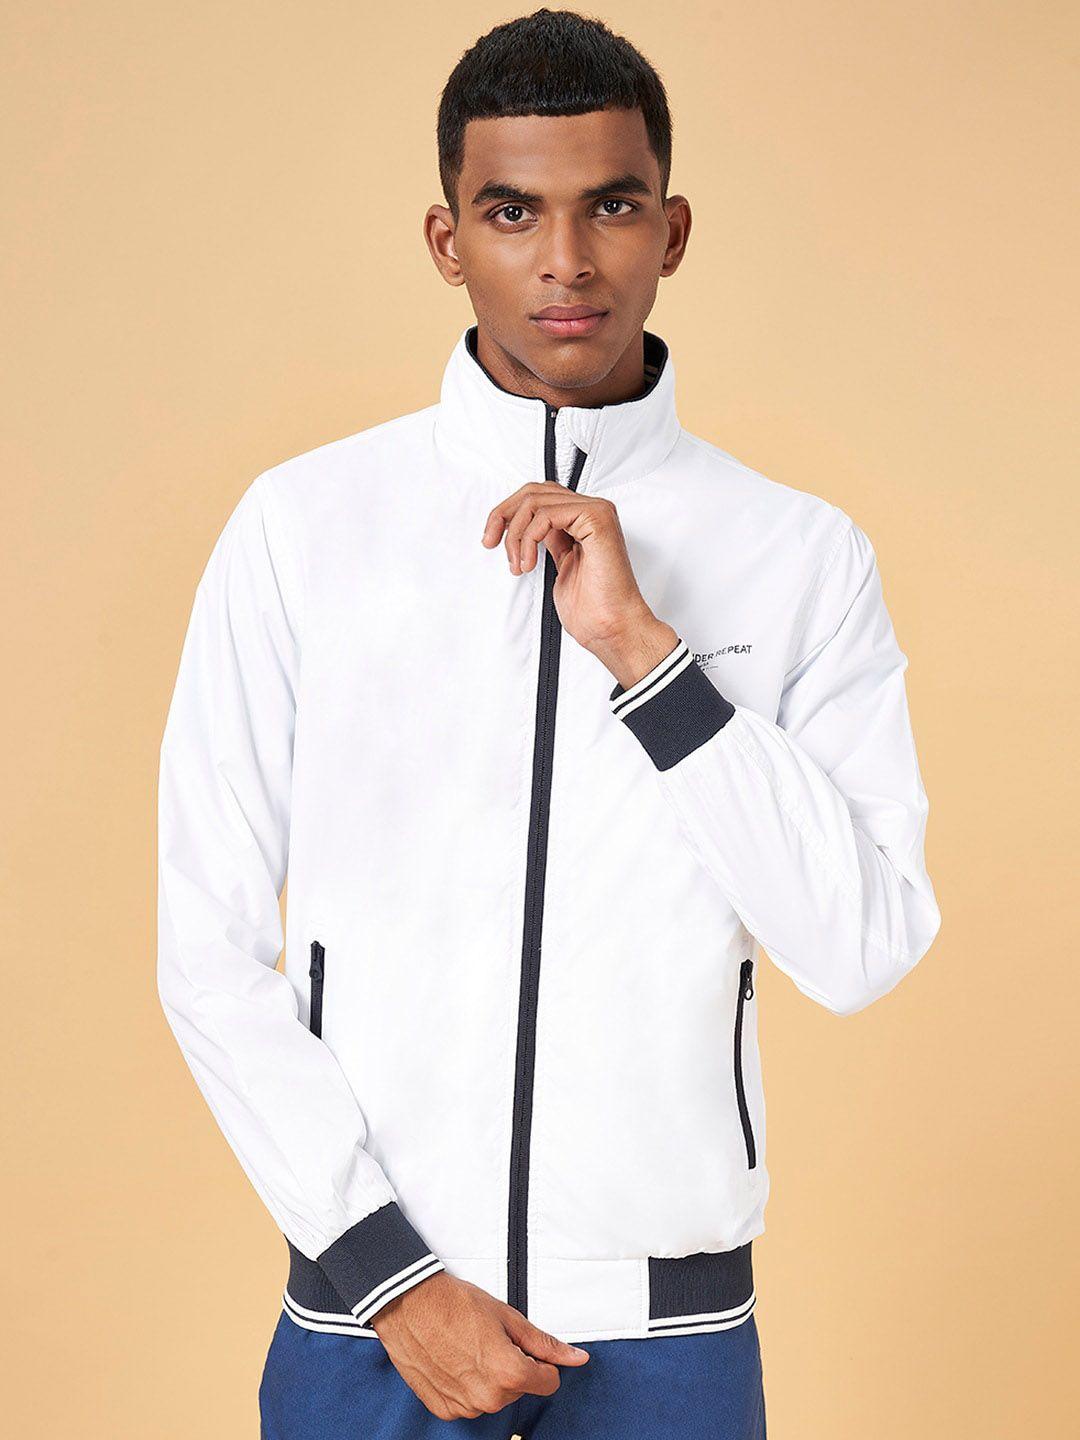 urban-ranger-by-pantaloons-men-white-colourblocked-tailored-jacket